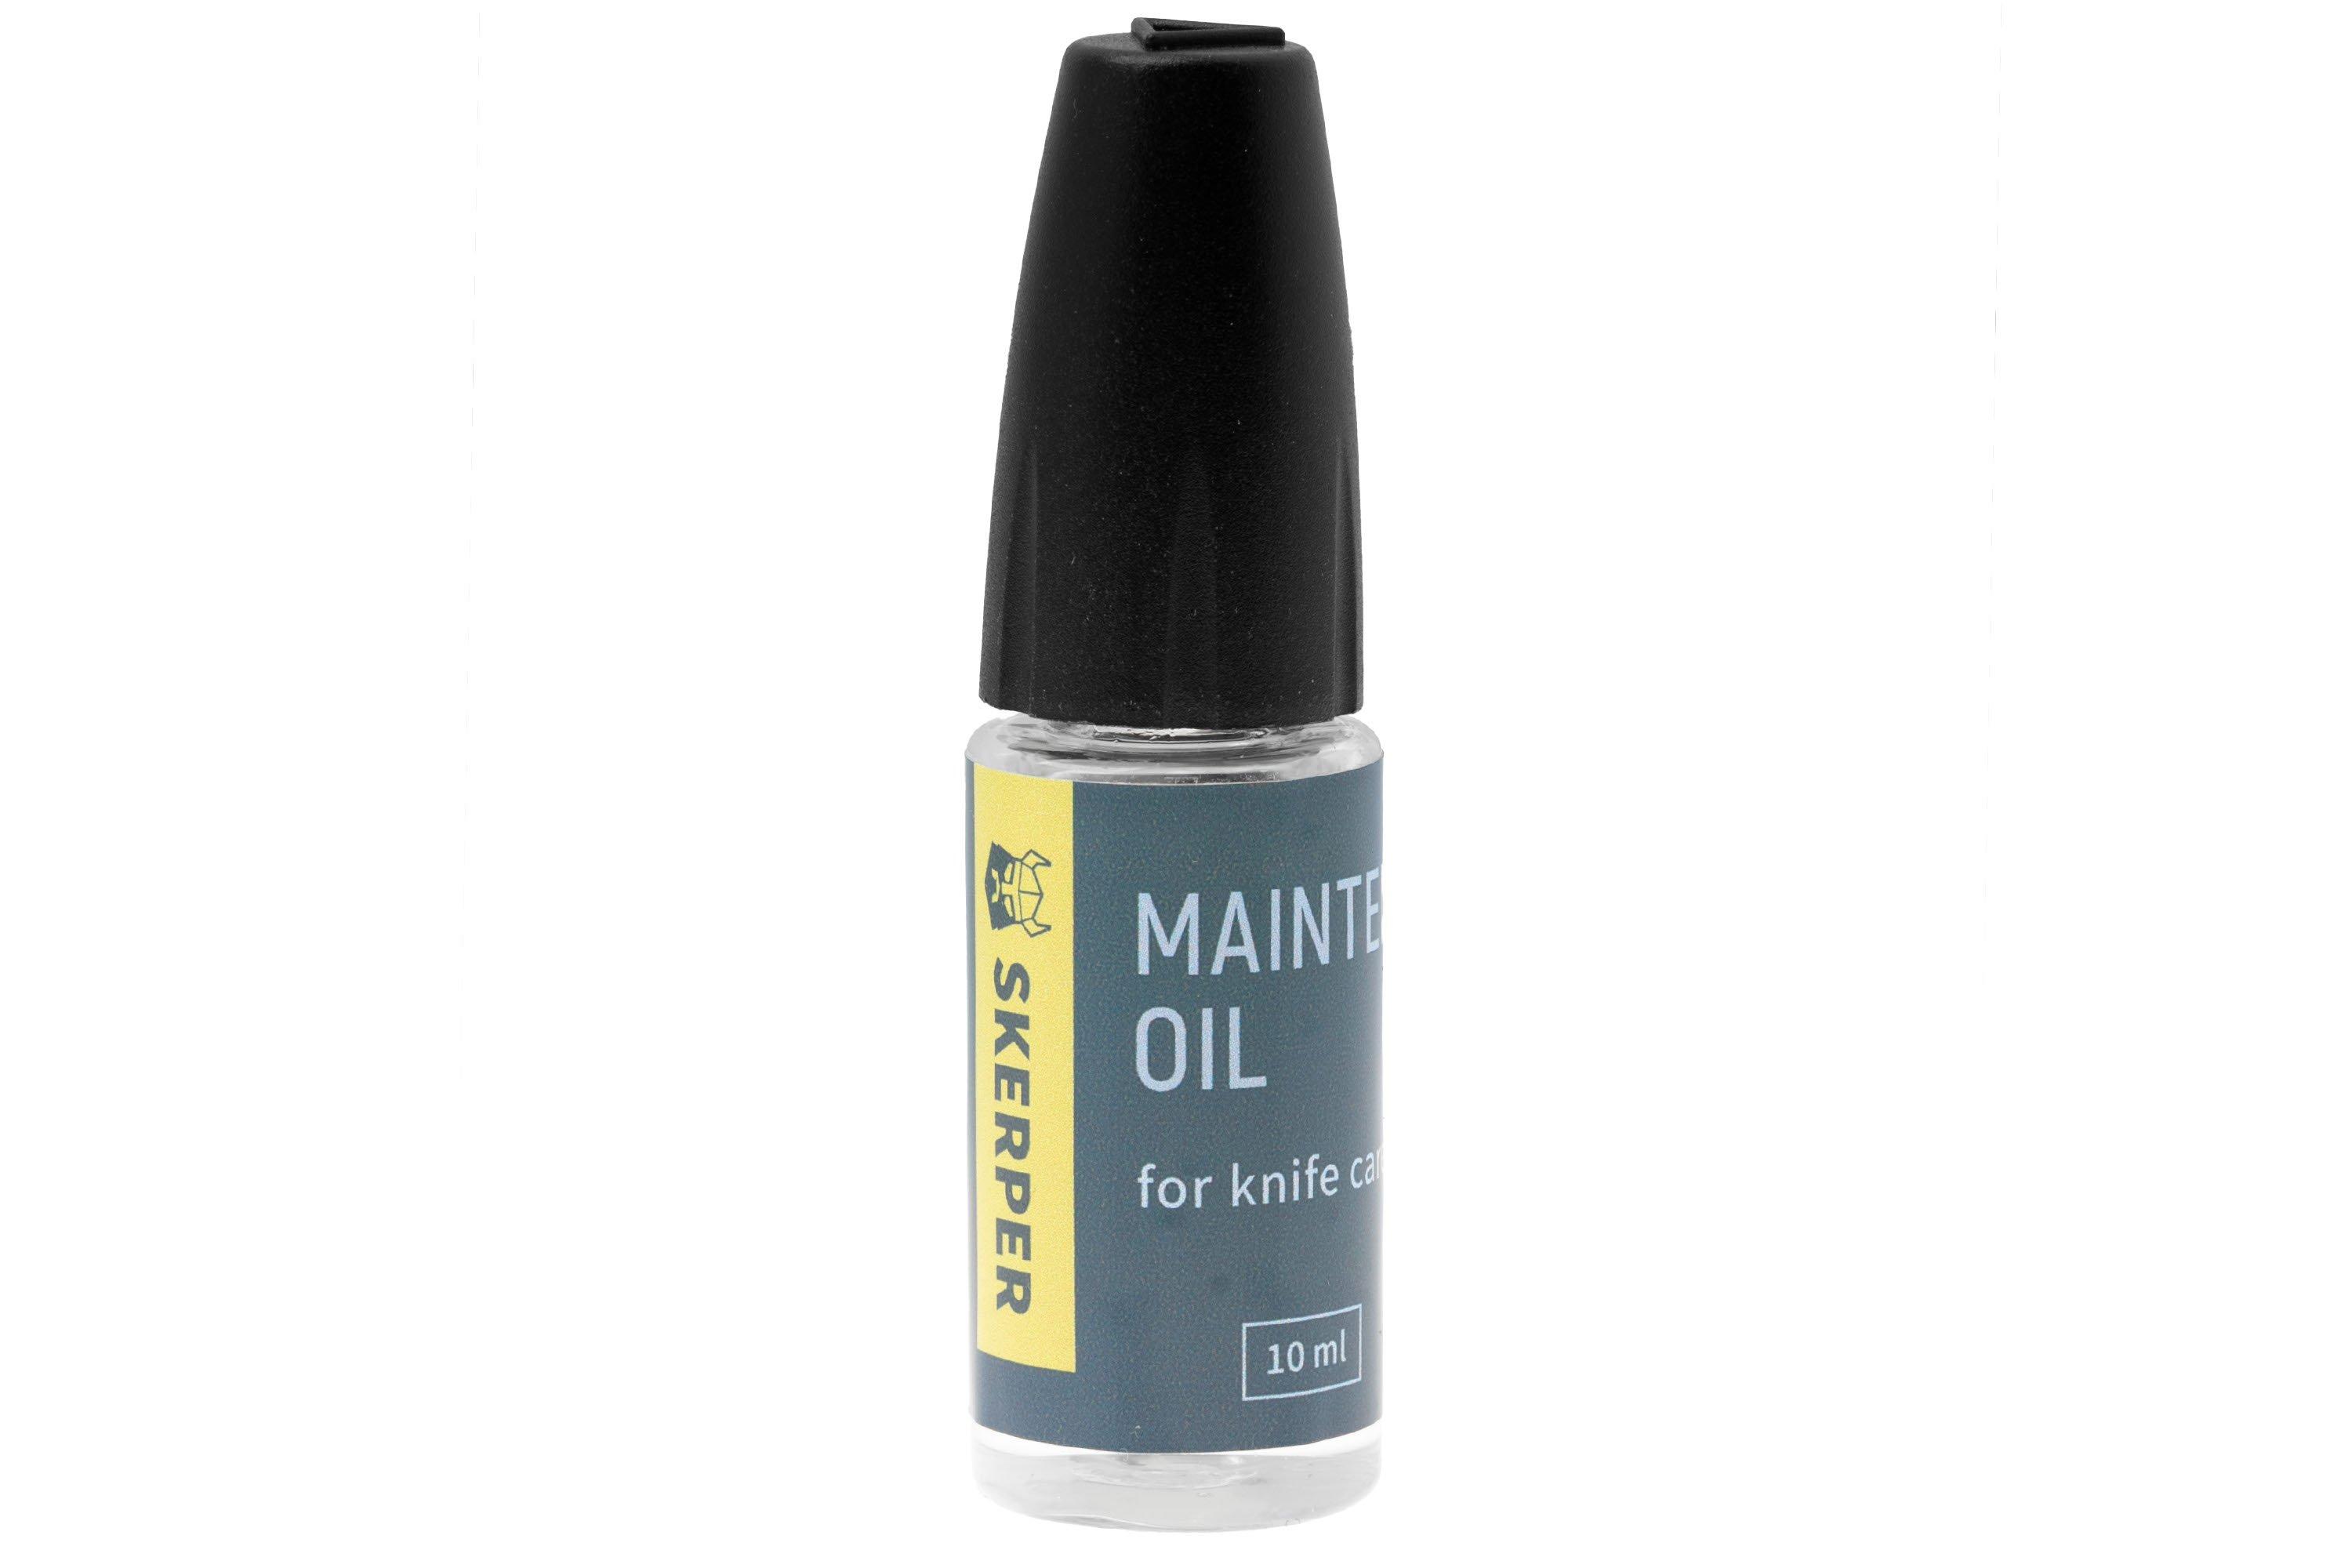 Ballistol maintenance oil pen, 15 ml  Advantageously shopping at